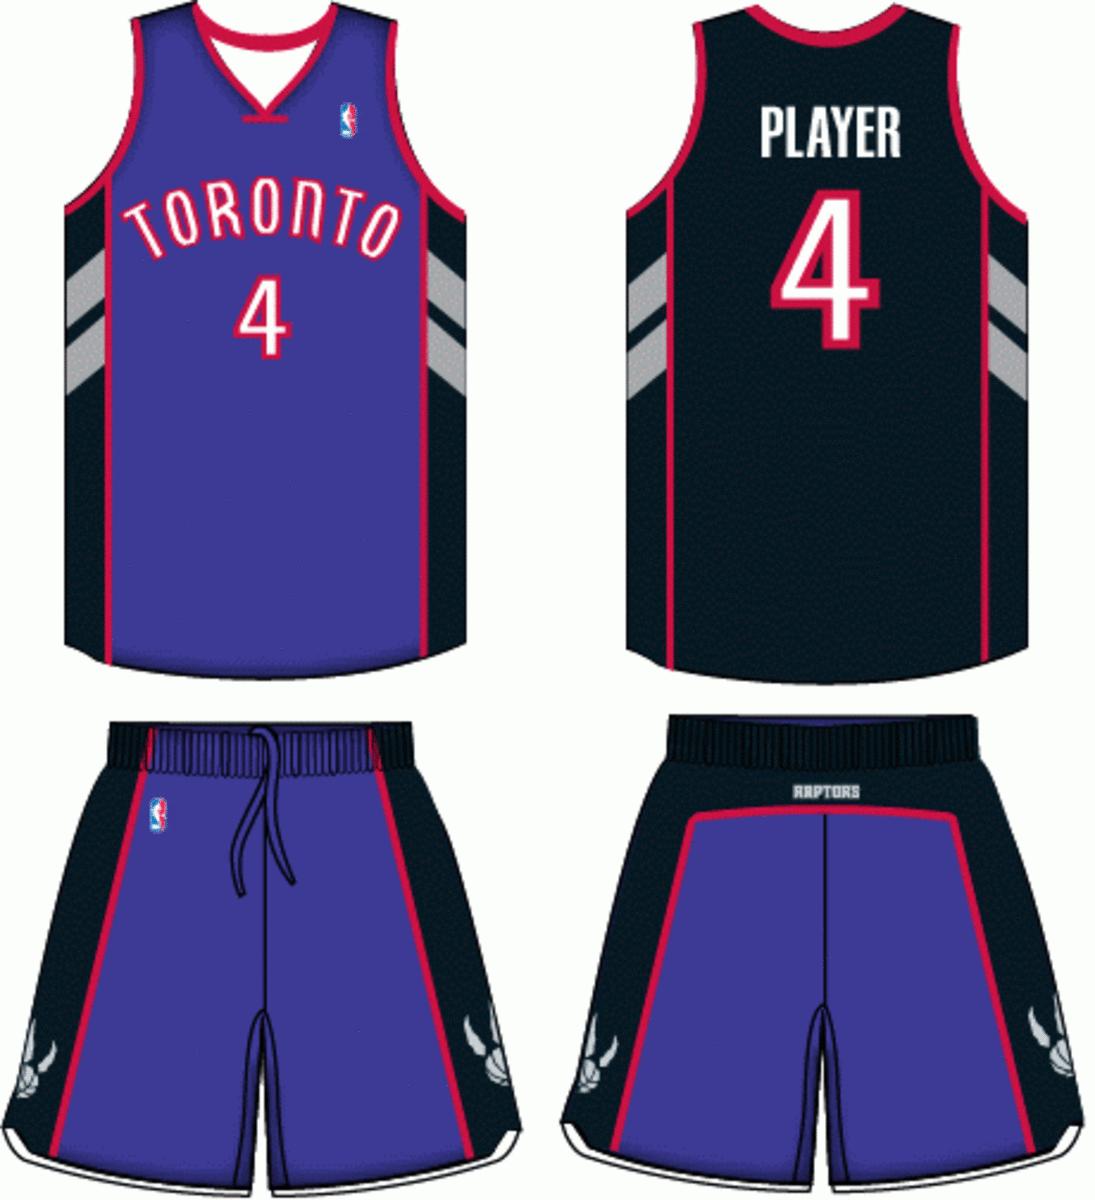 Toronto Raptors Home Uniform  Toronto raptors, Raptors, Sport shirt design